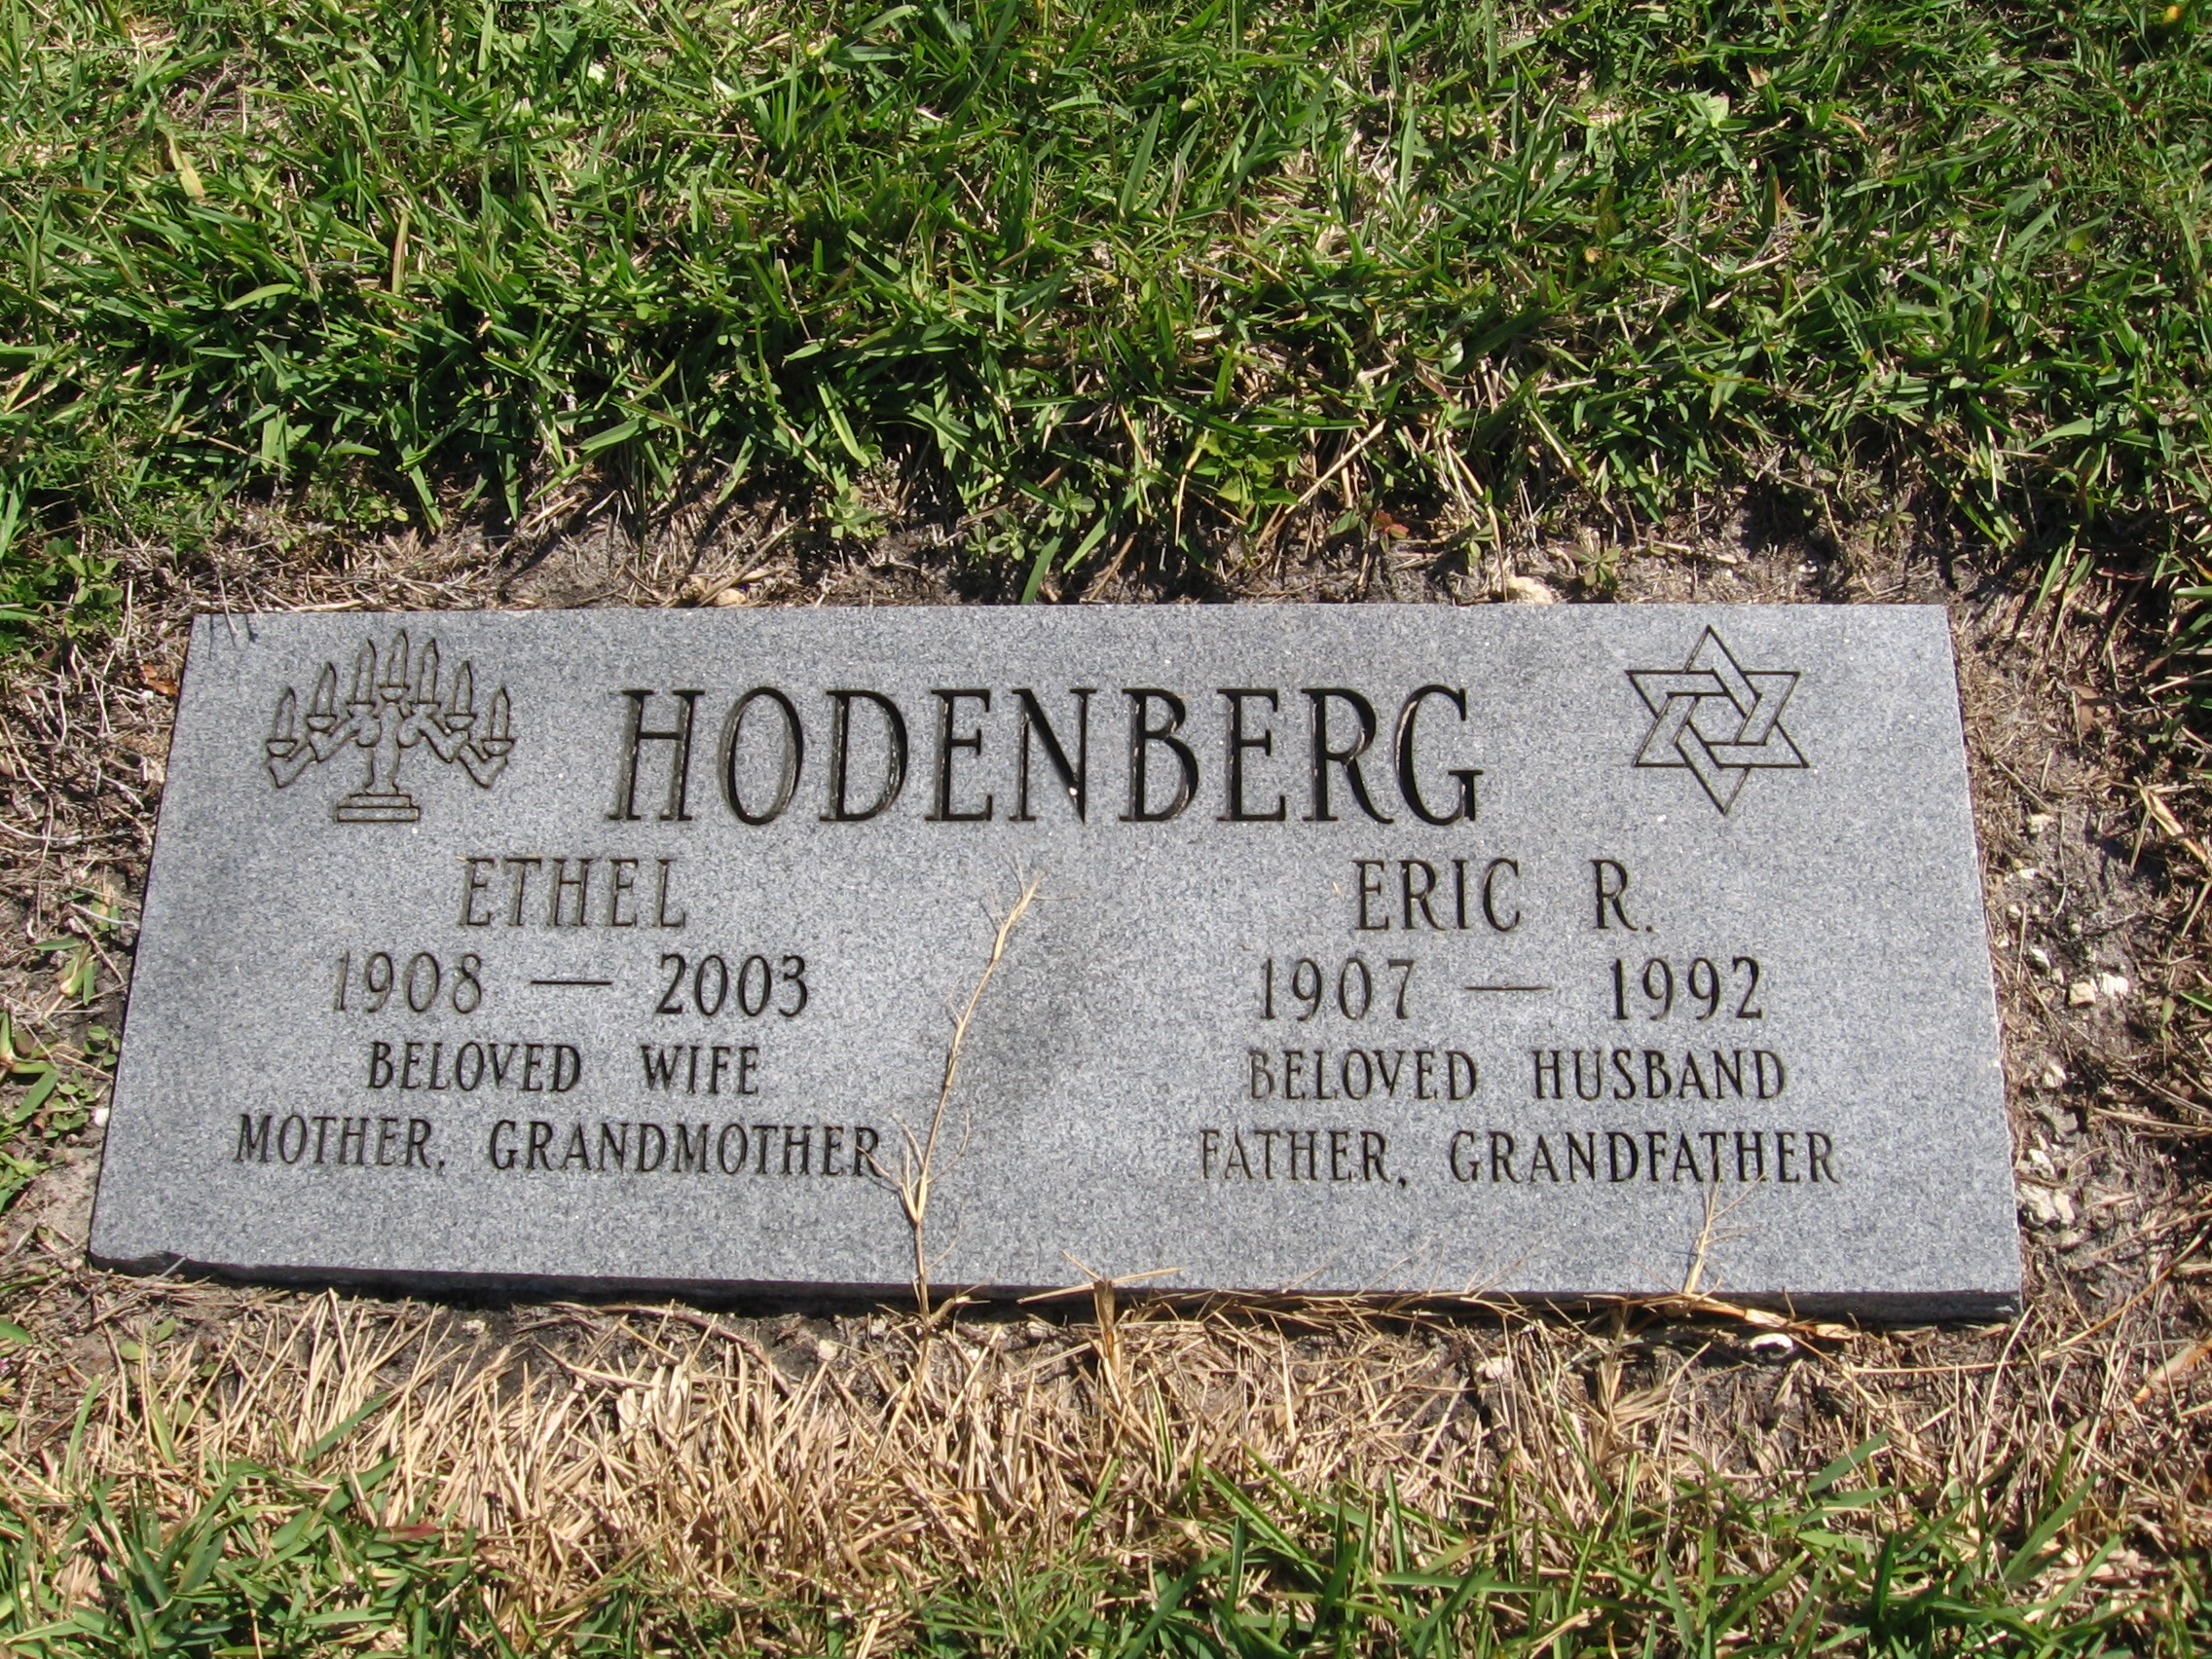 Eric R Hodenberg